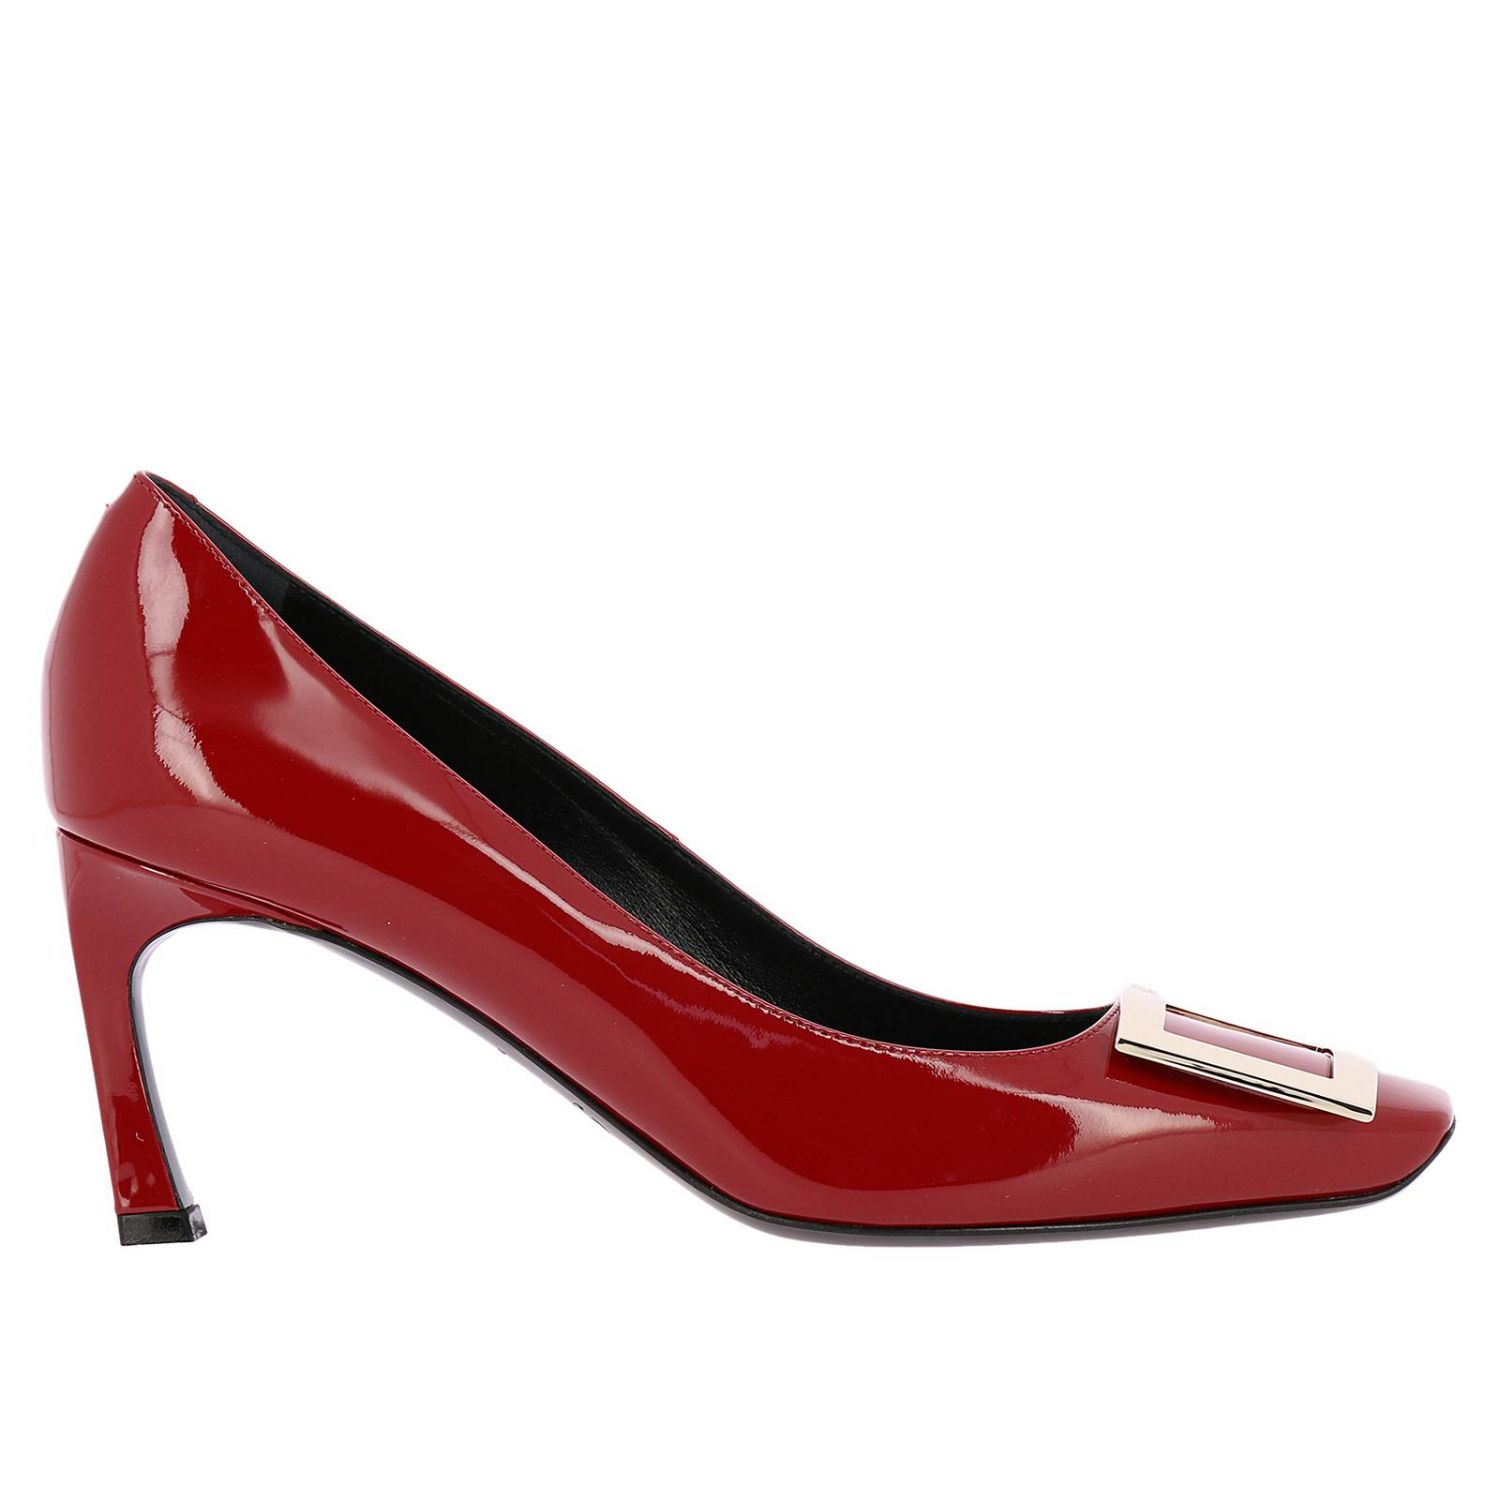 ROGER VIVIER: Shoes women - Ruby | Roger Vivier high heel shoes ...